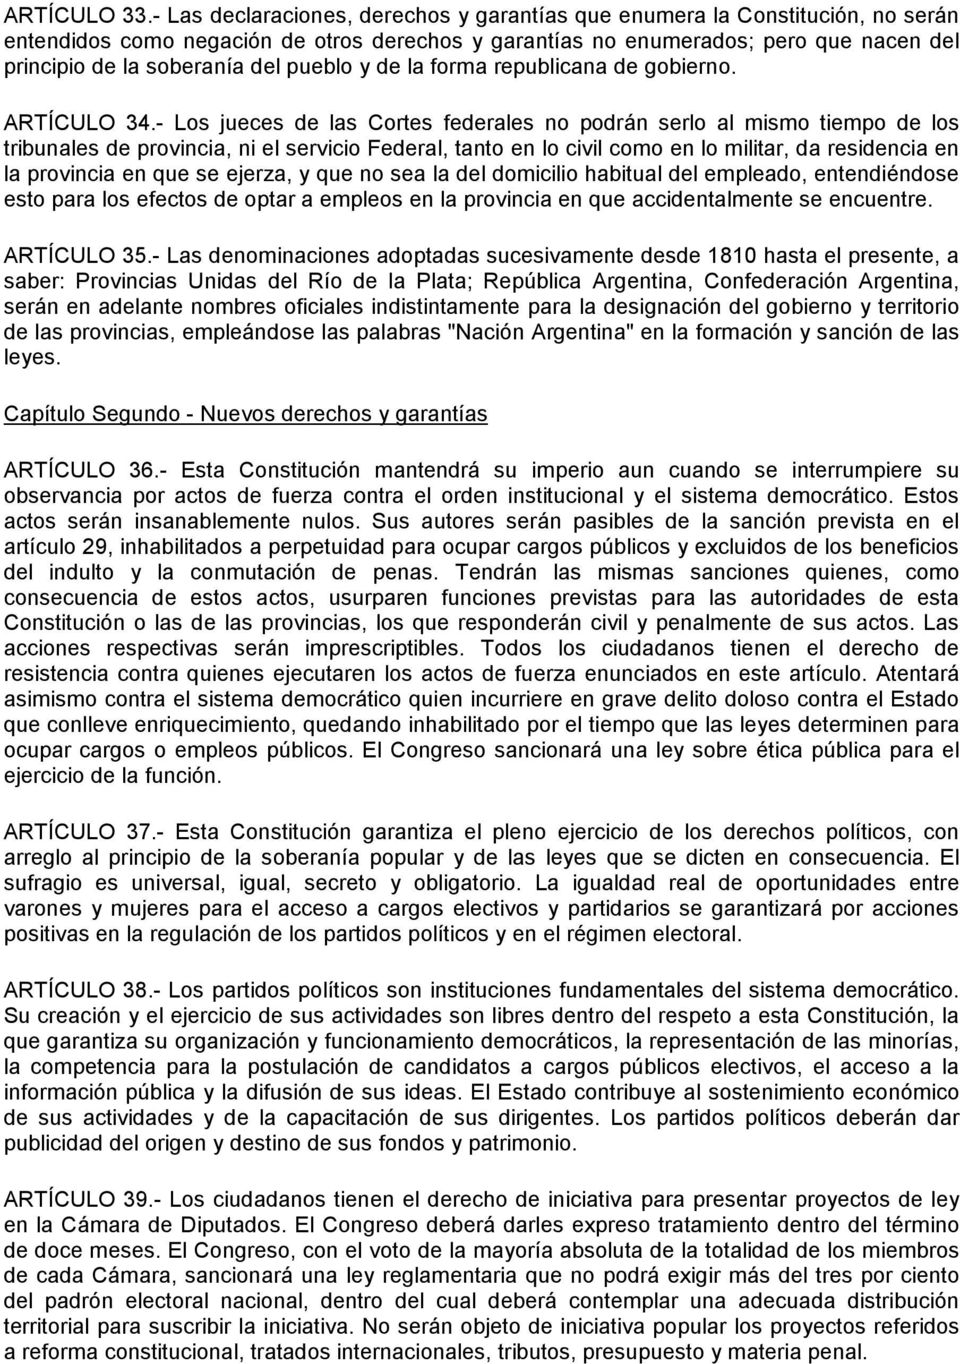 Constitucion De La Nacion Argentina Pdf Free Download